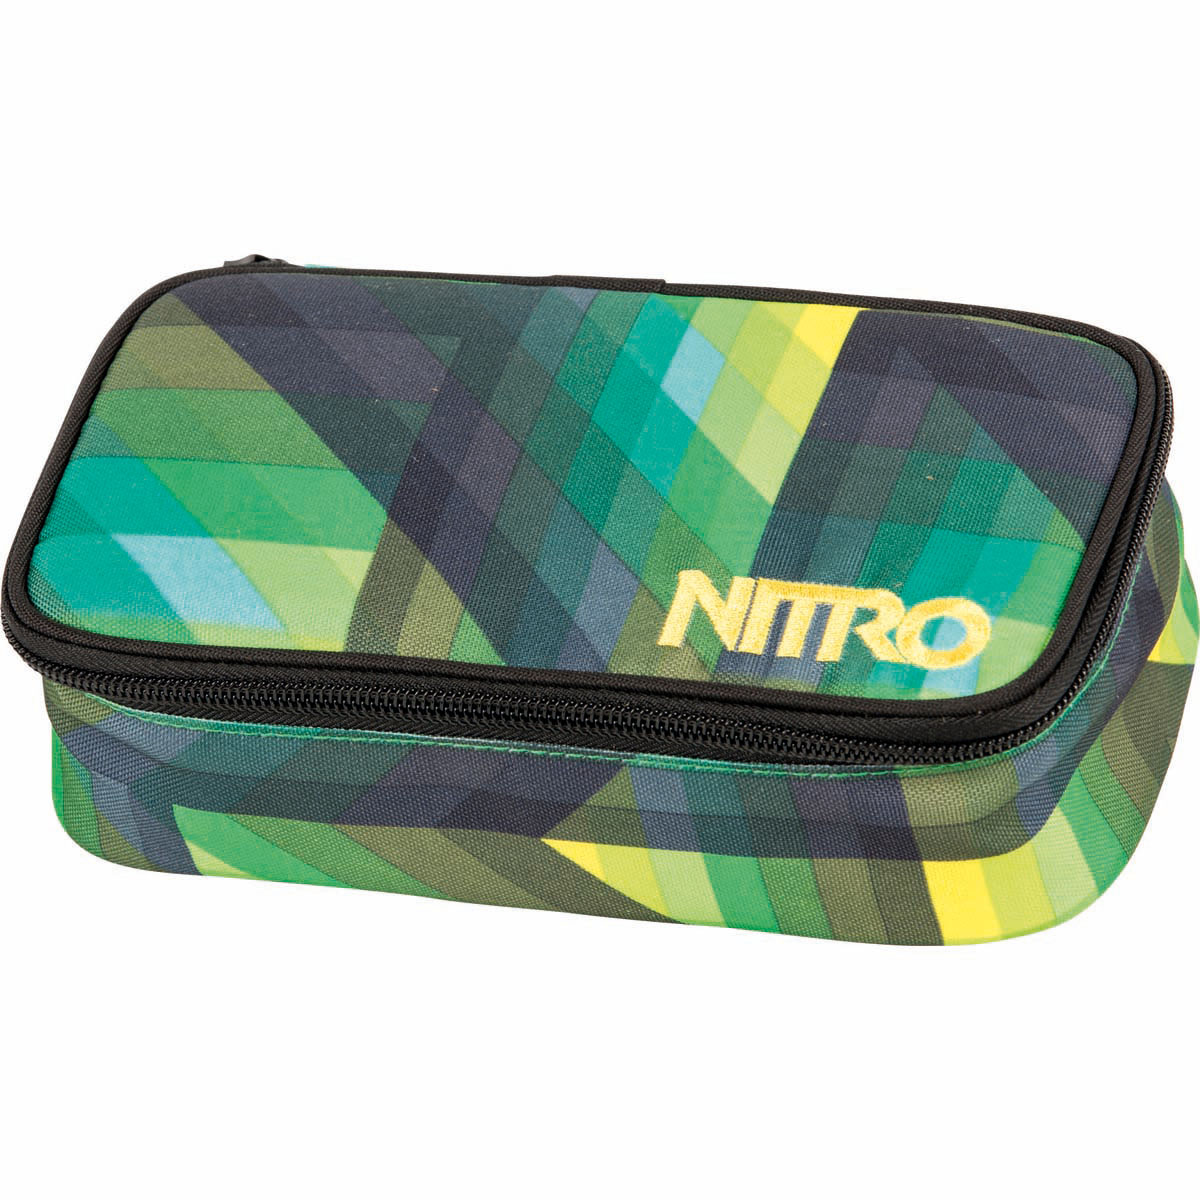 Nitro Pencil Case XL Mäppchen Geo Green | Nitrobags Shop